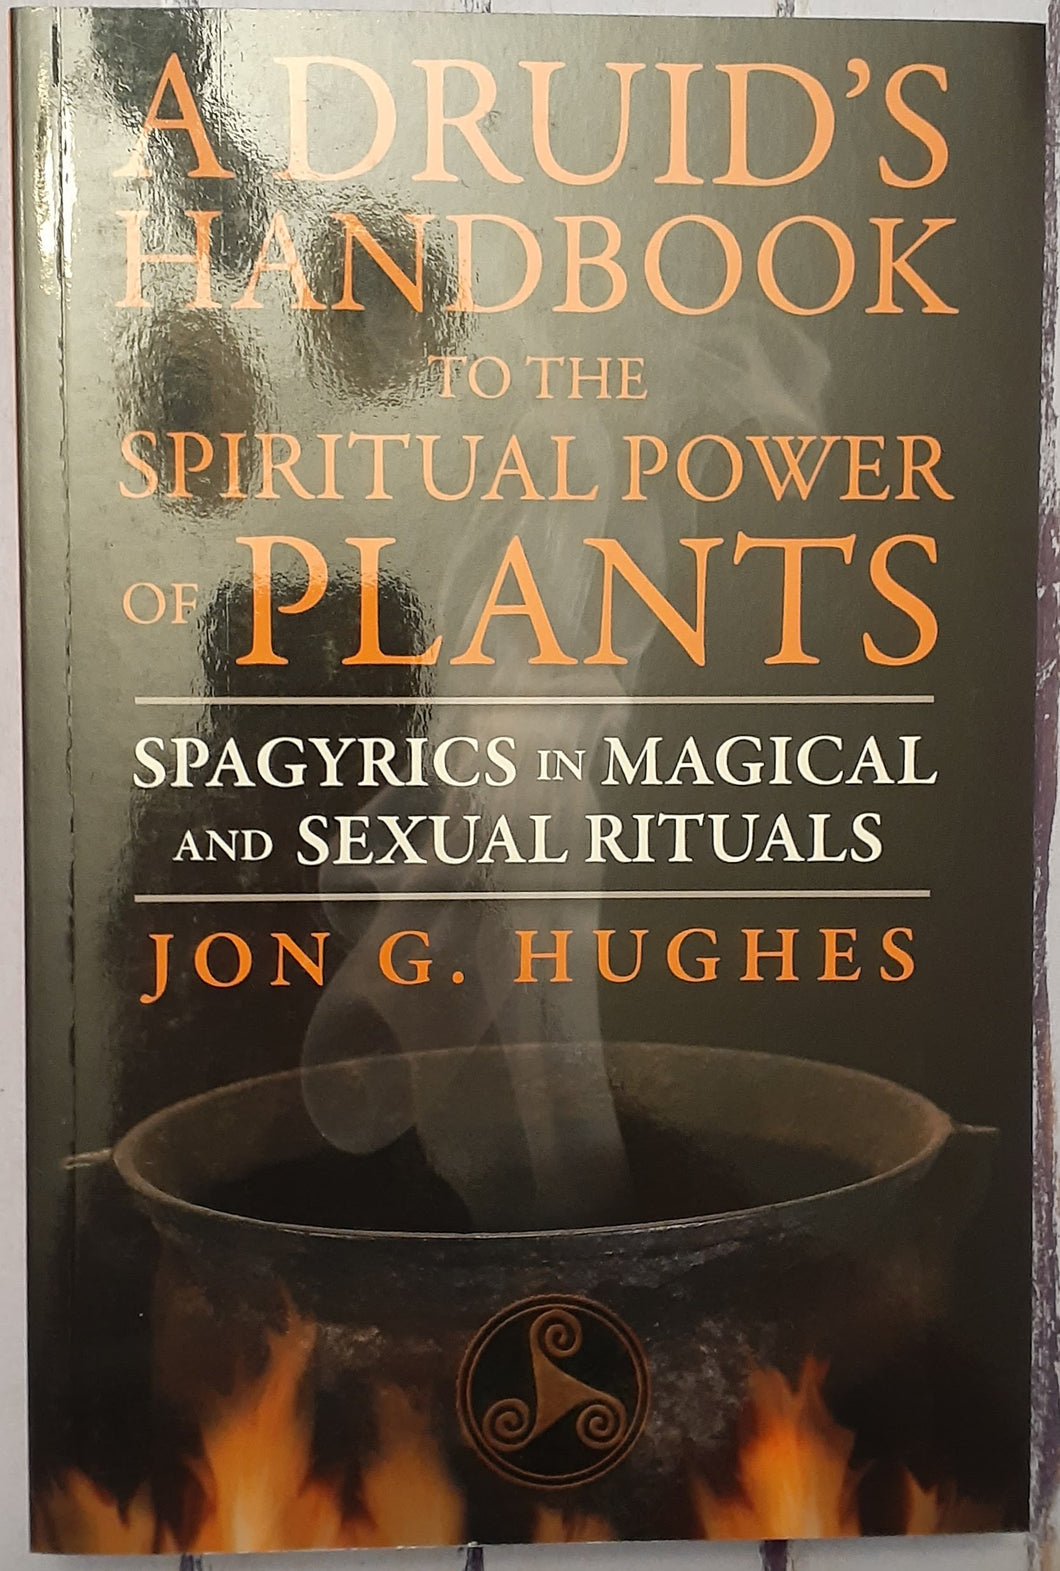 A Druids Handbook to the Spiritual Power of Plants